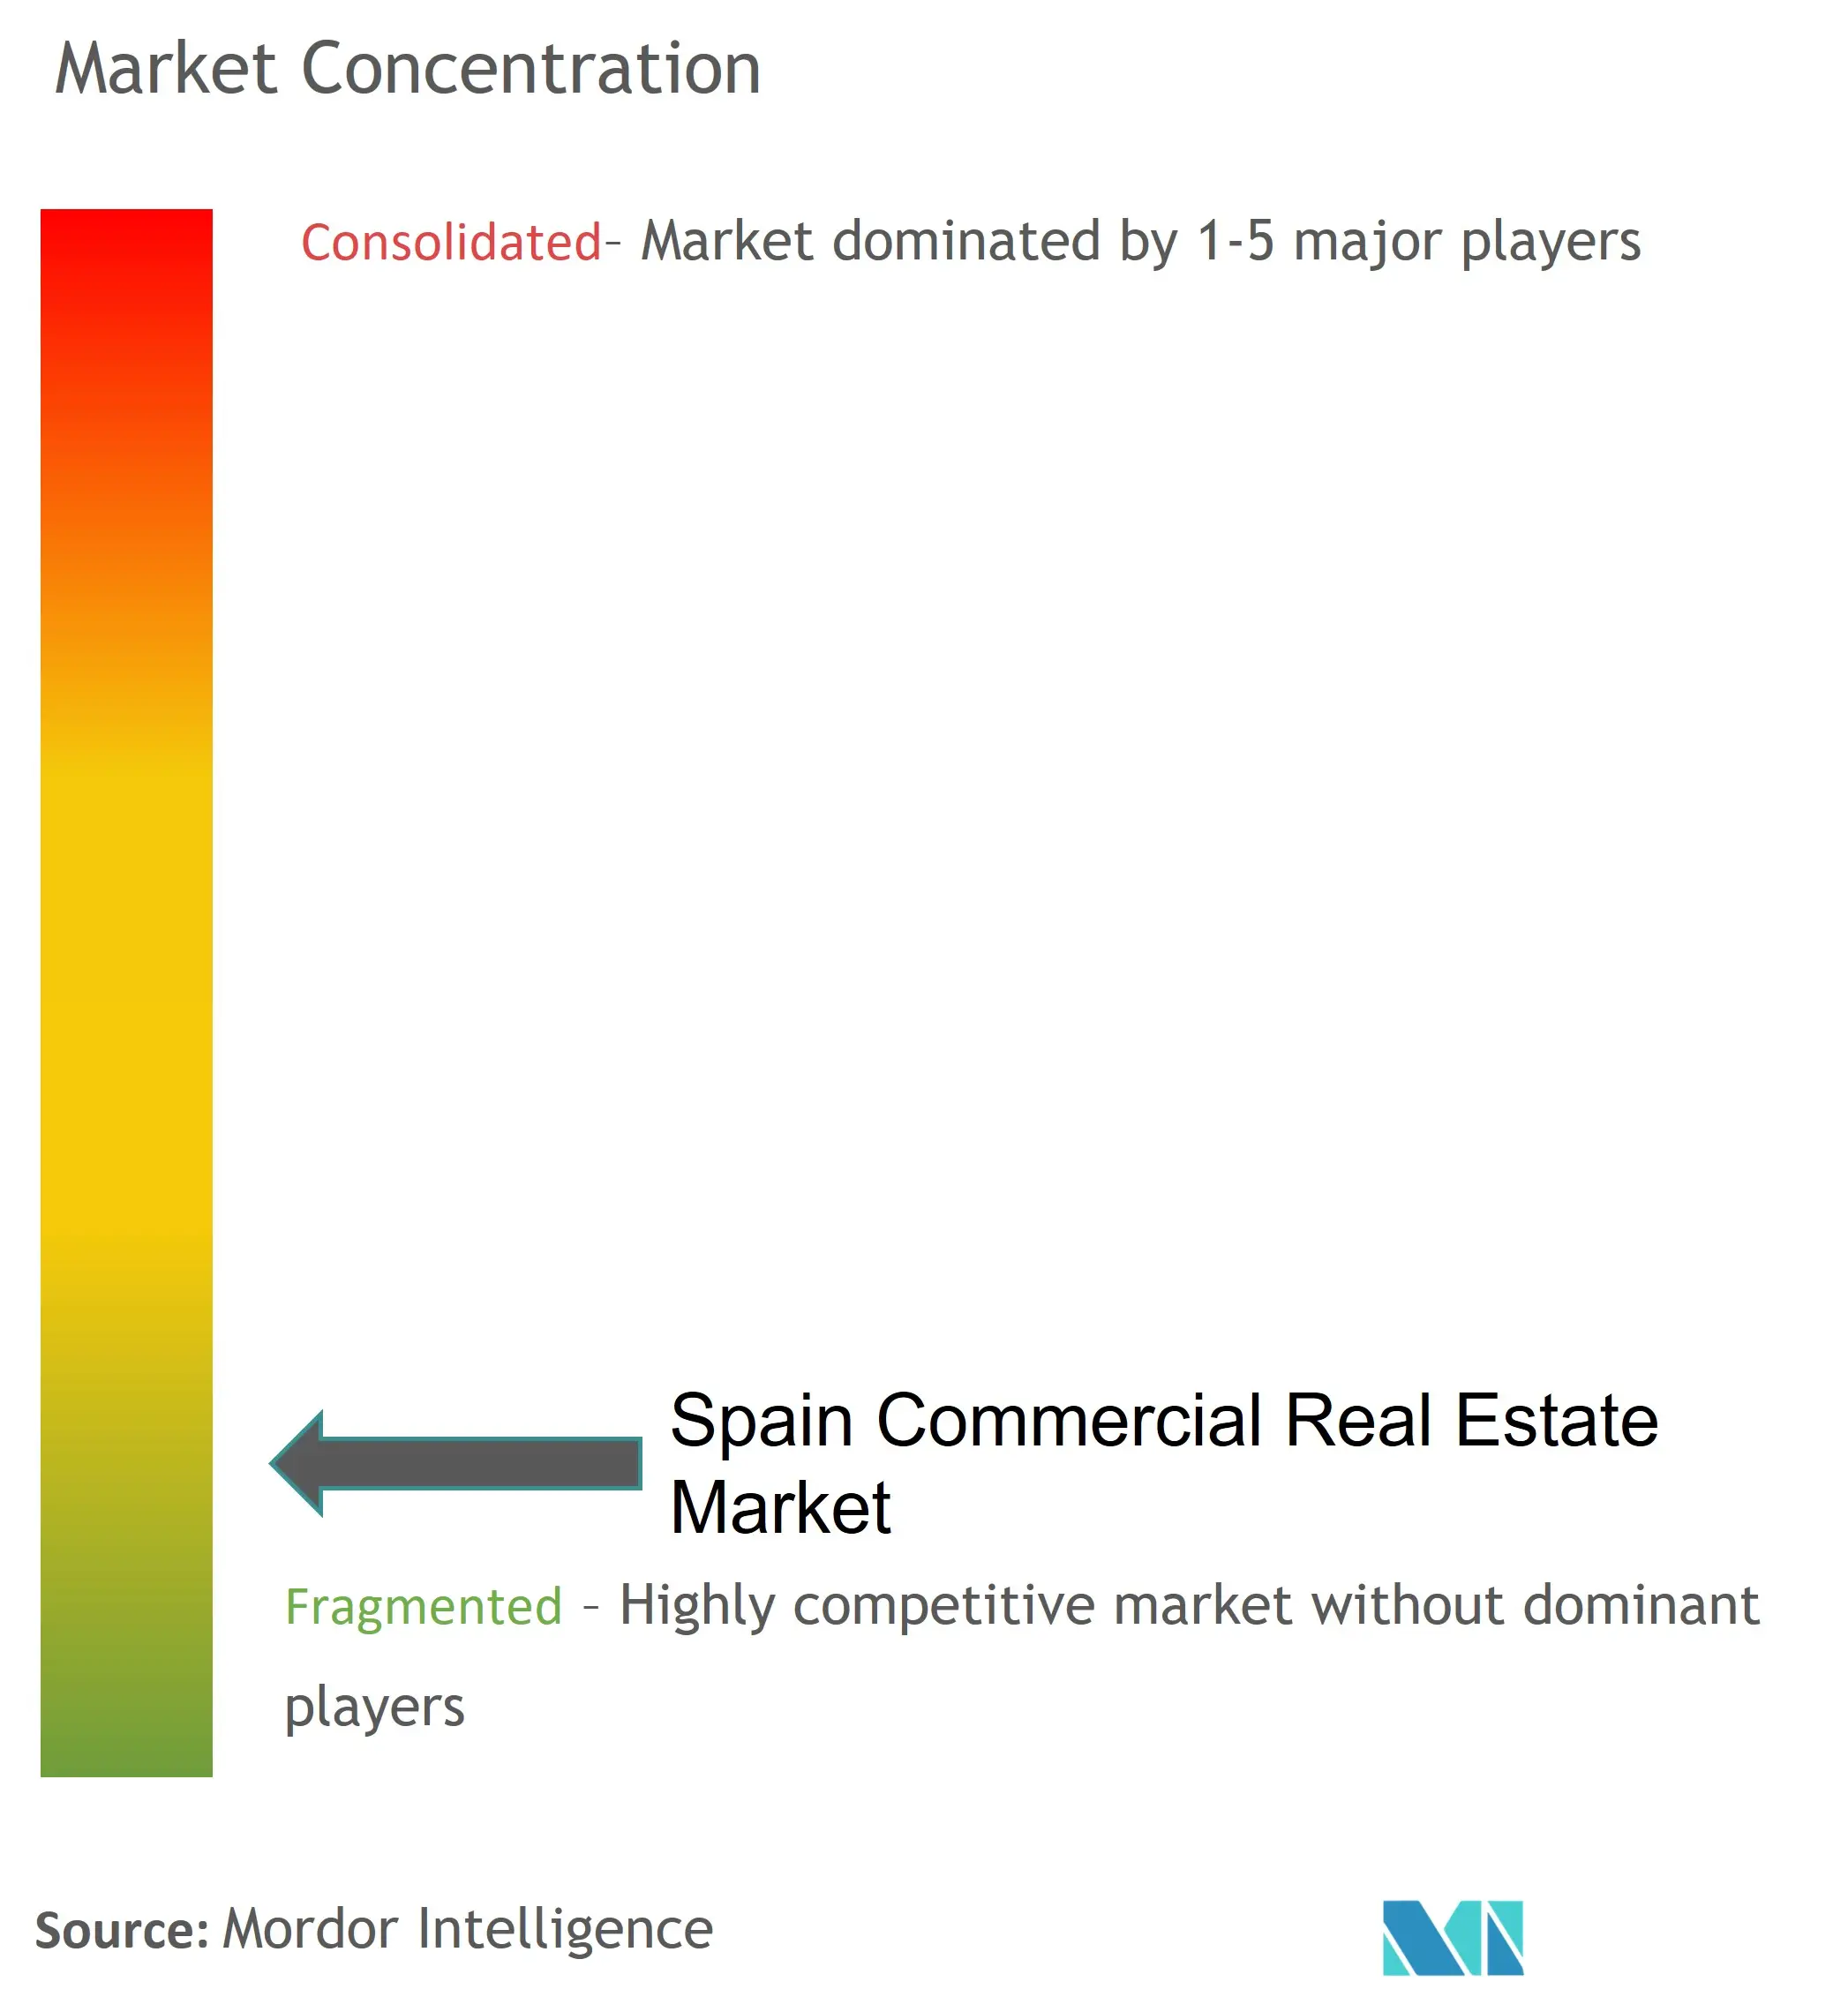 Spain Commercial Real Estate Market Concentration